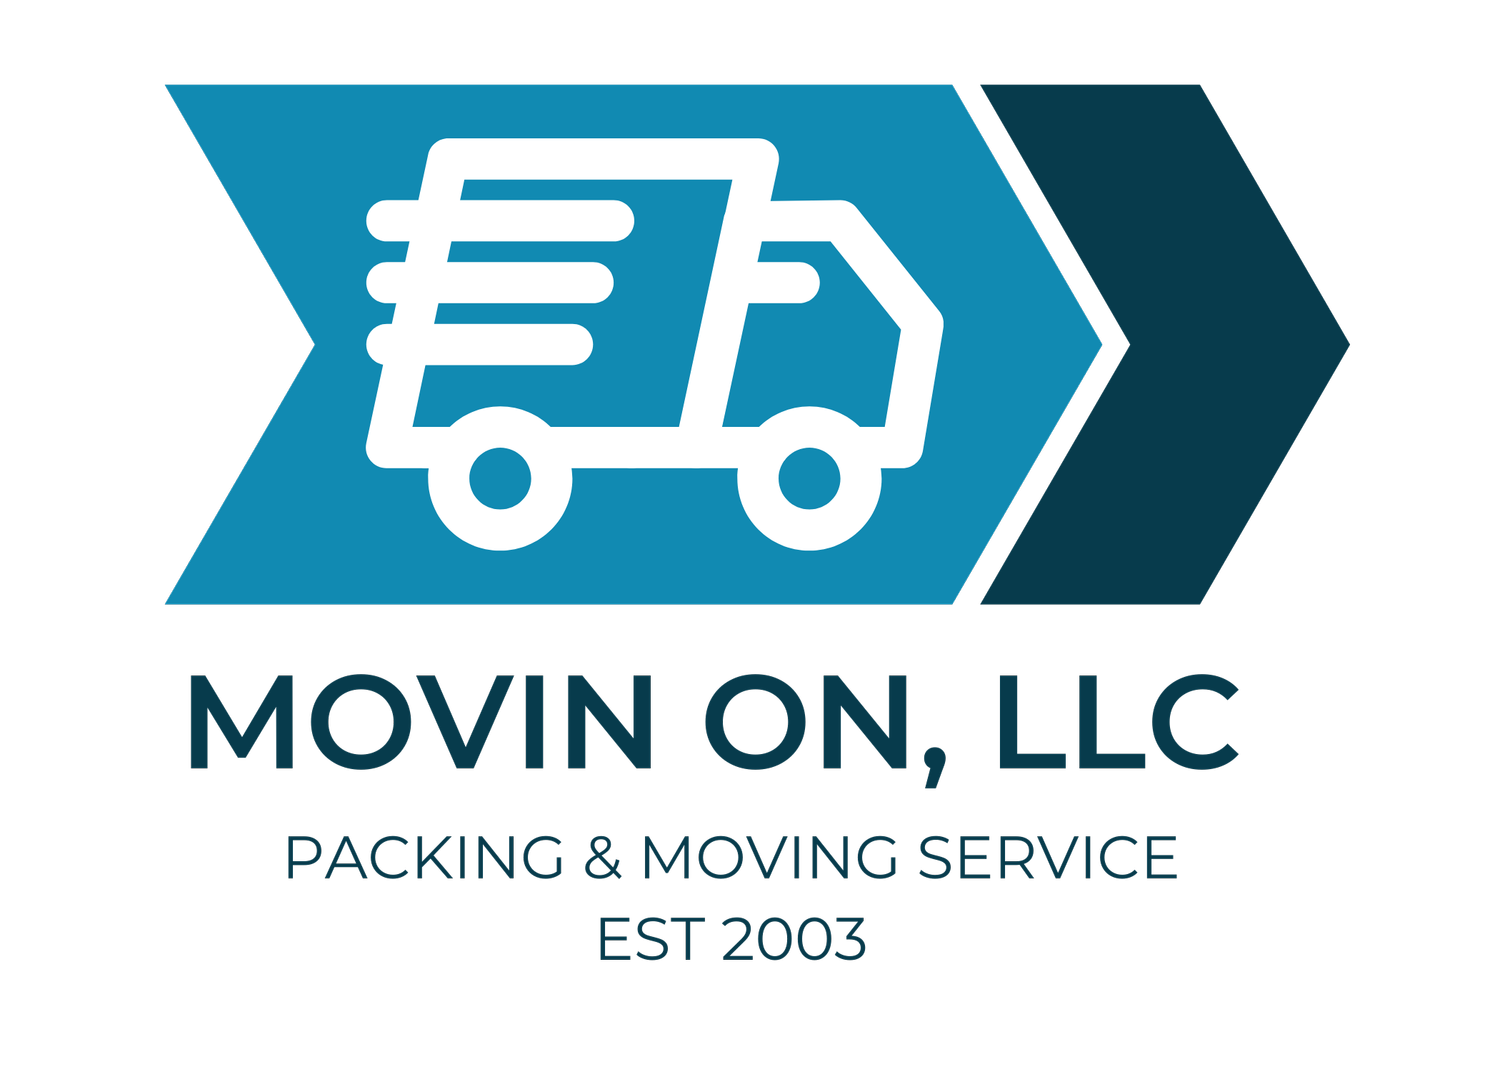 Movin On, LLC